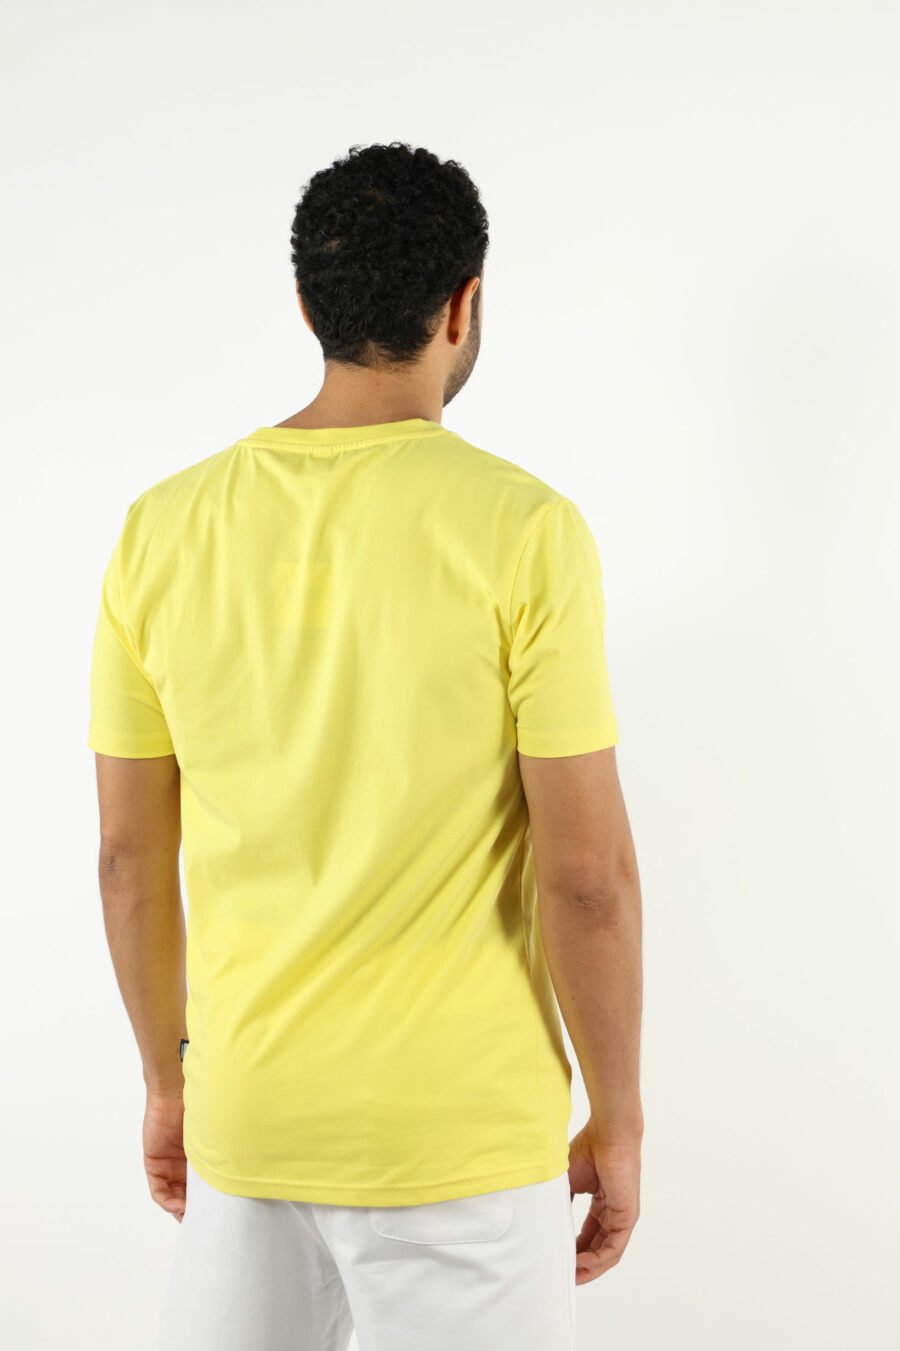 Yellow T-shirt with mini logo bear patch "underbear" - 111028